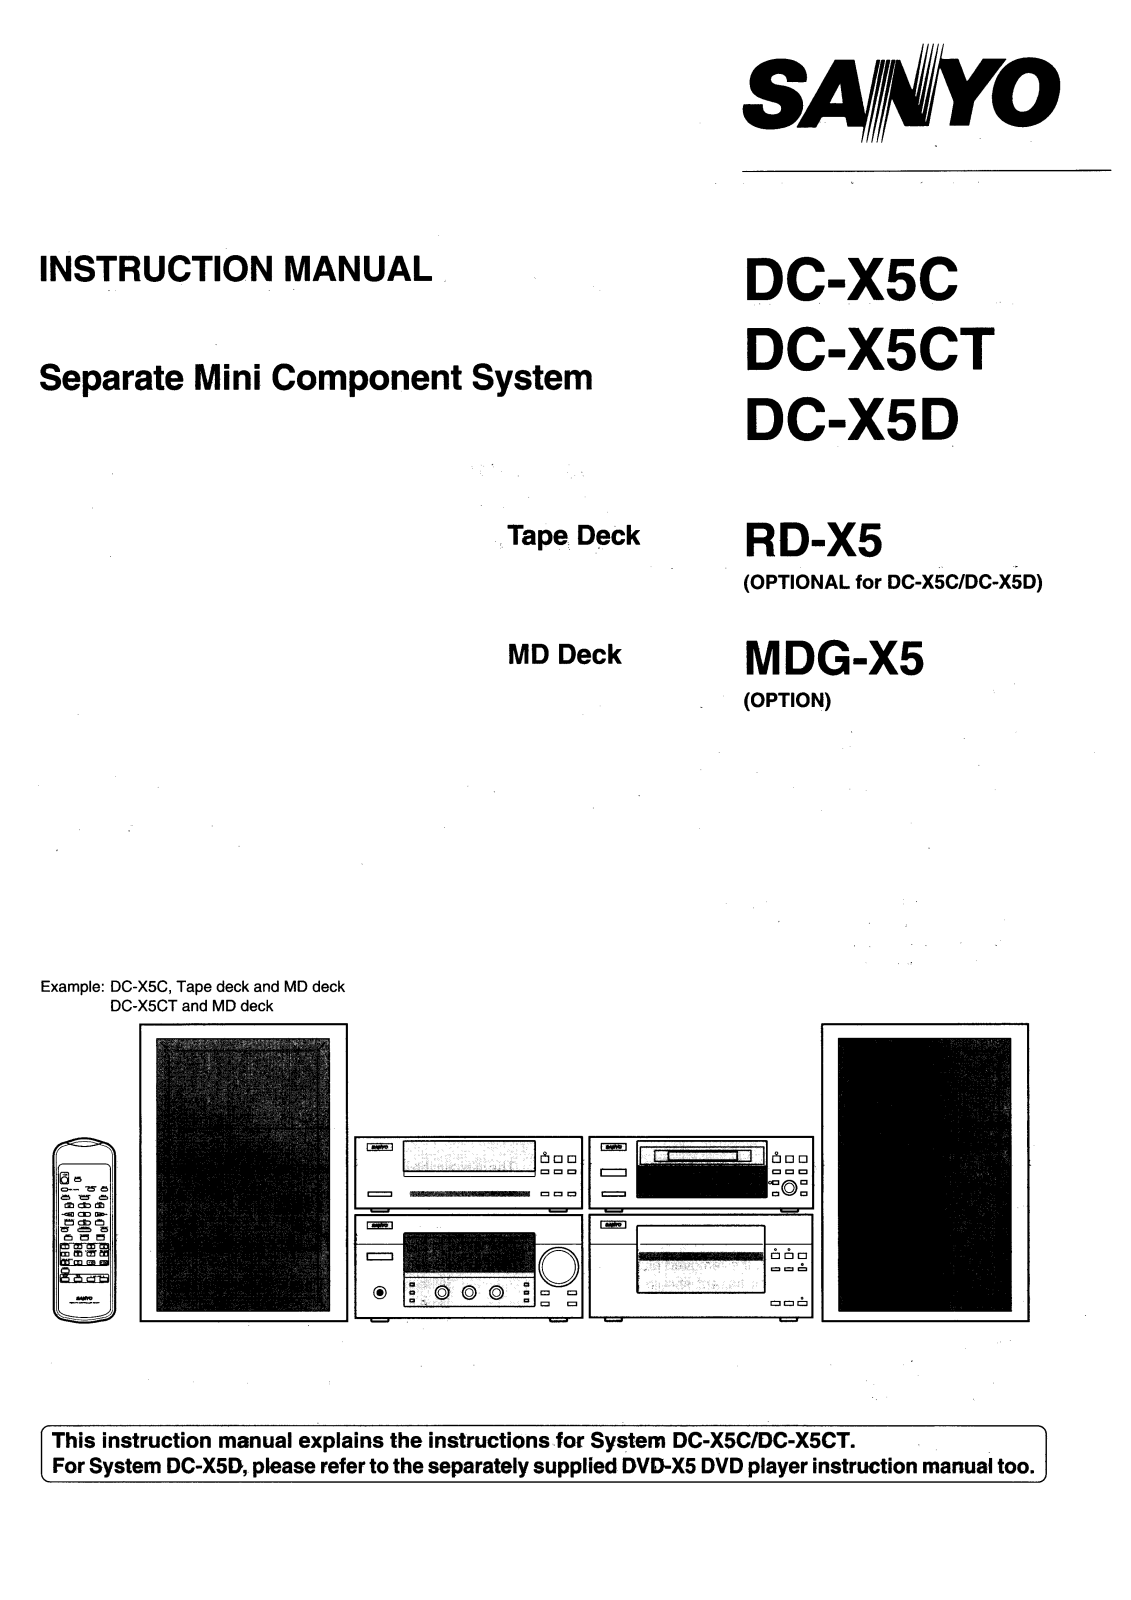 Sanyo DC-X5C, DC-X5CT, DC-X5D Instruction Manual